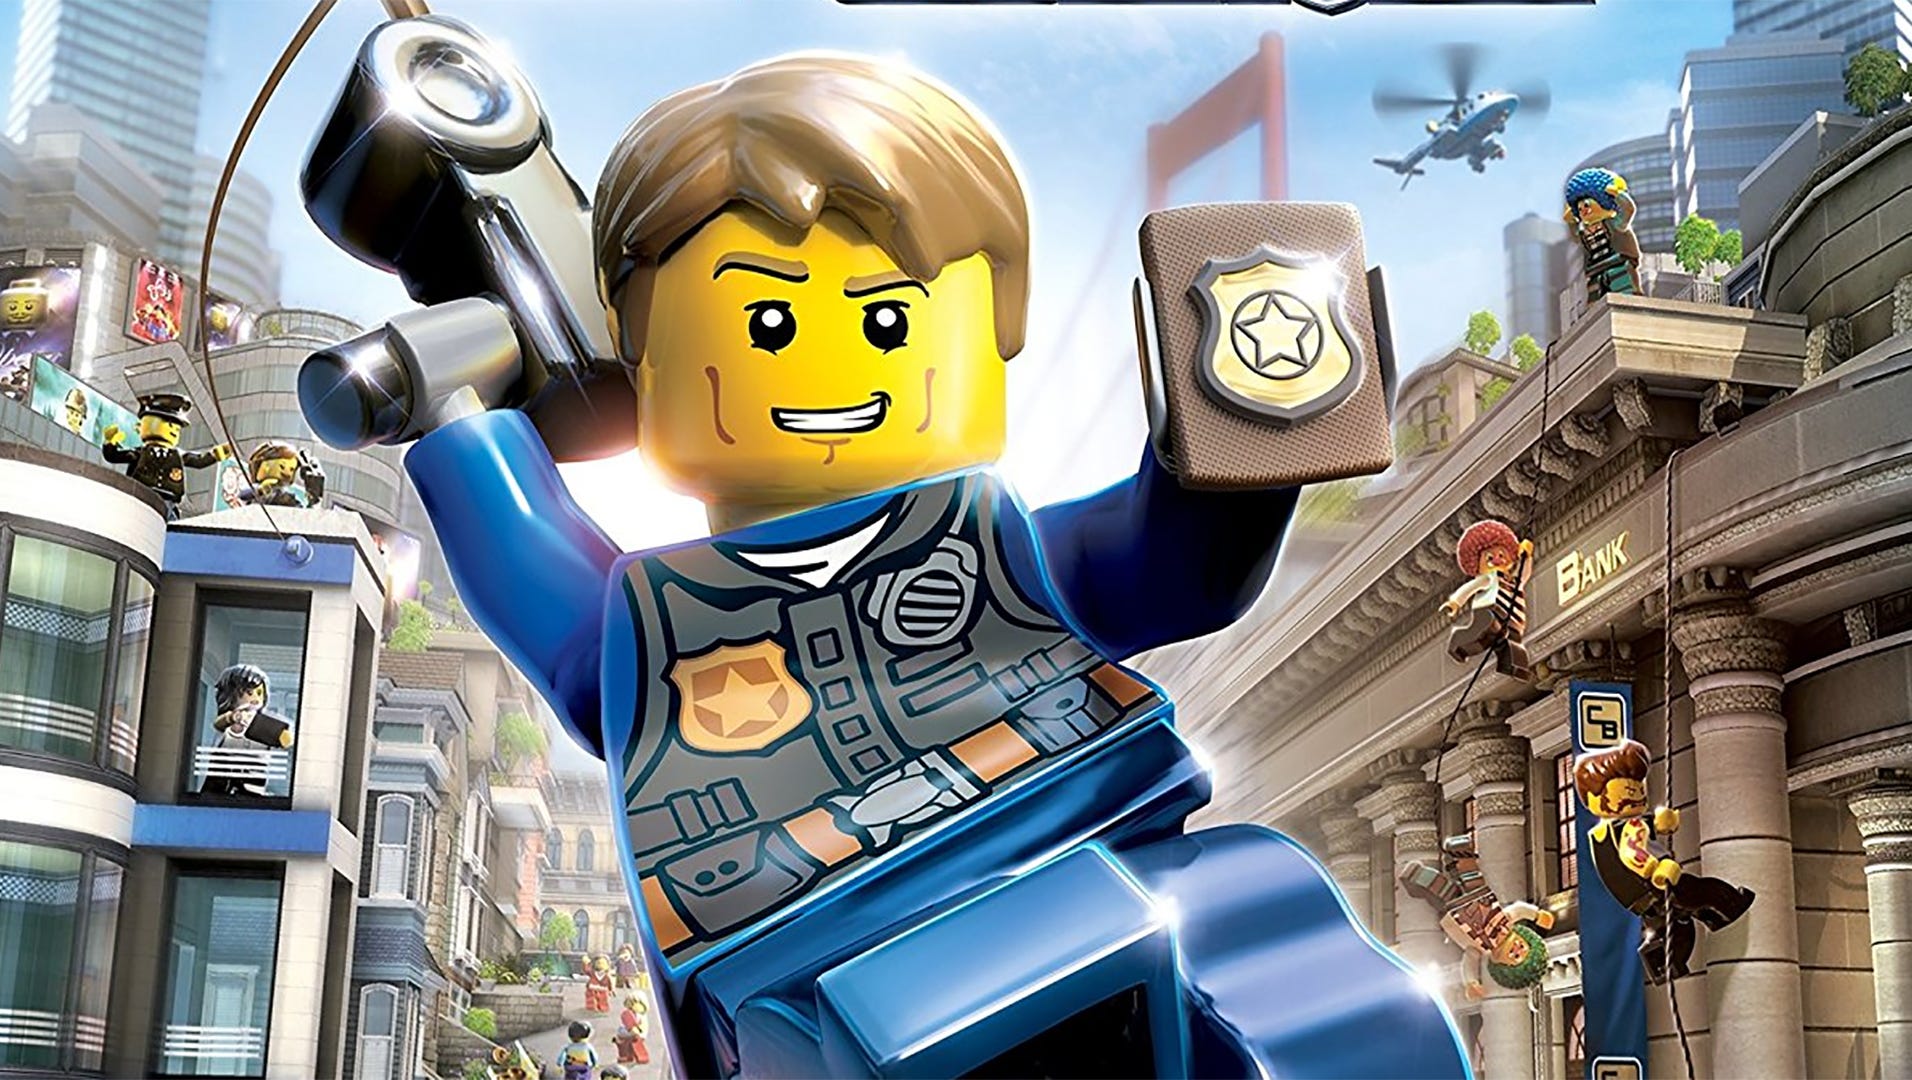 City block: Lego City (2017) review